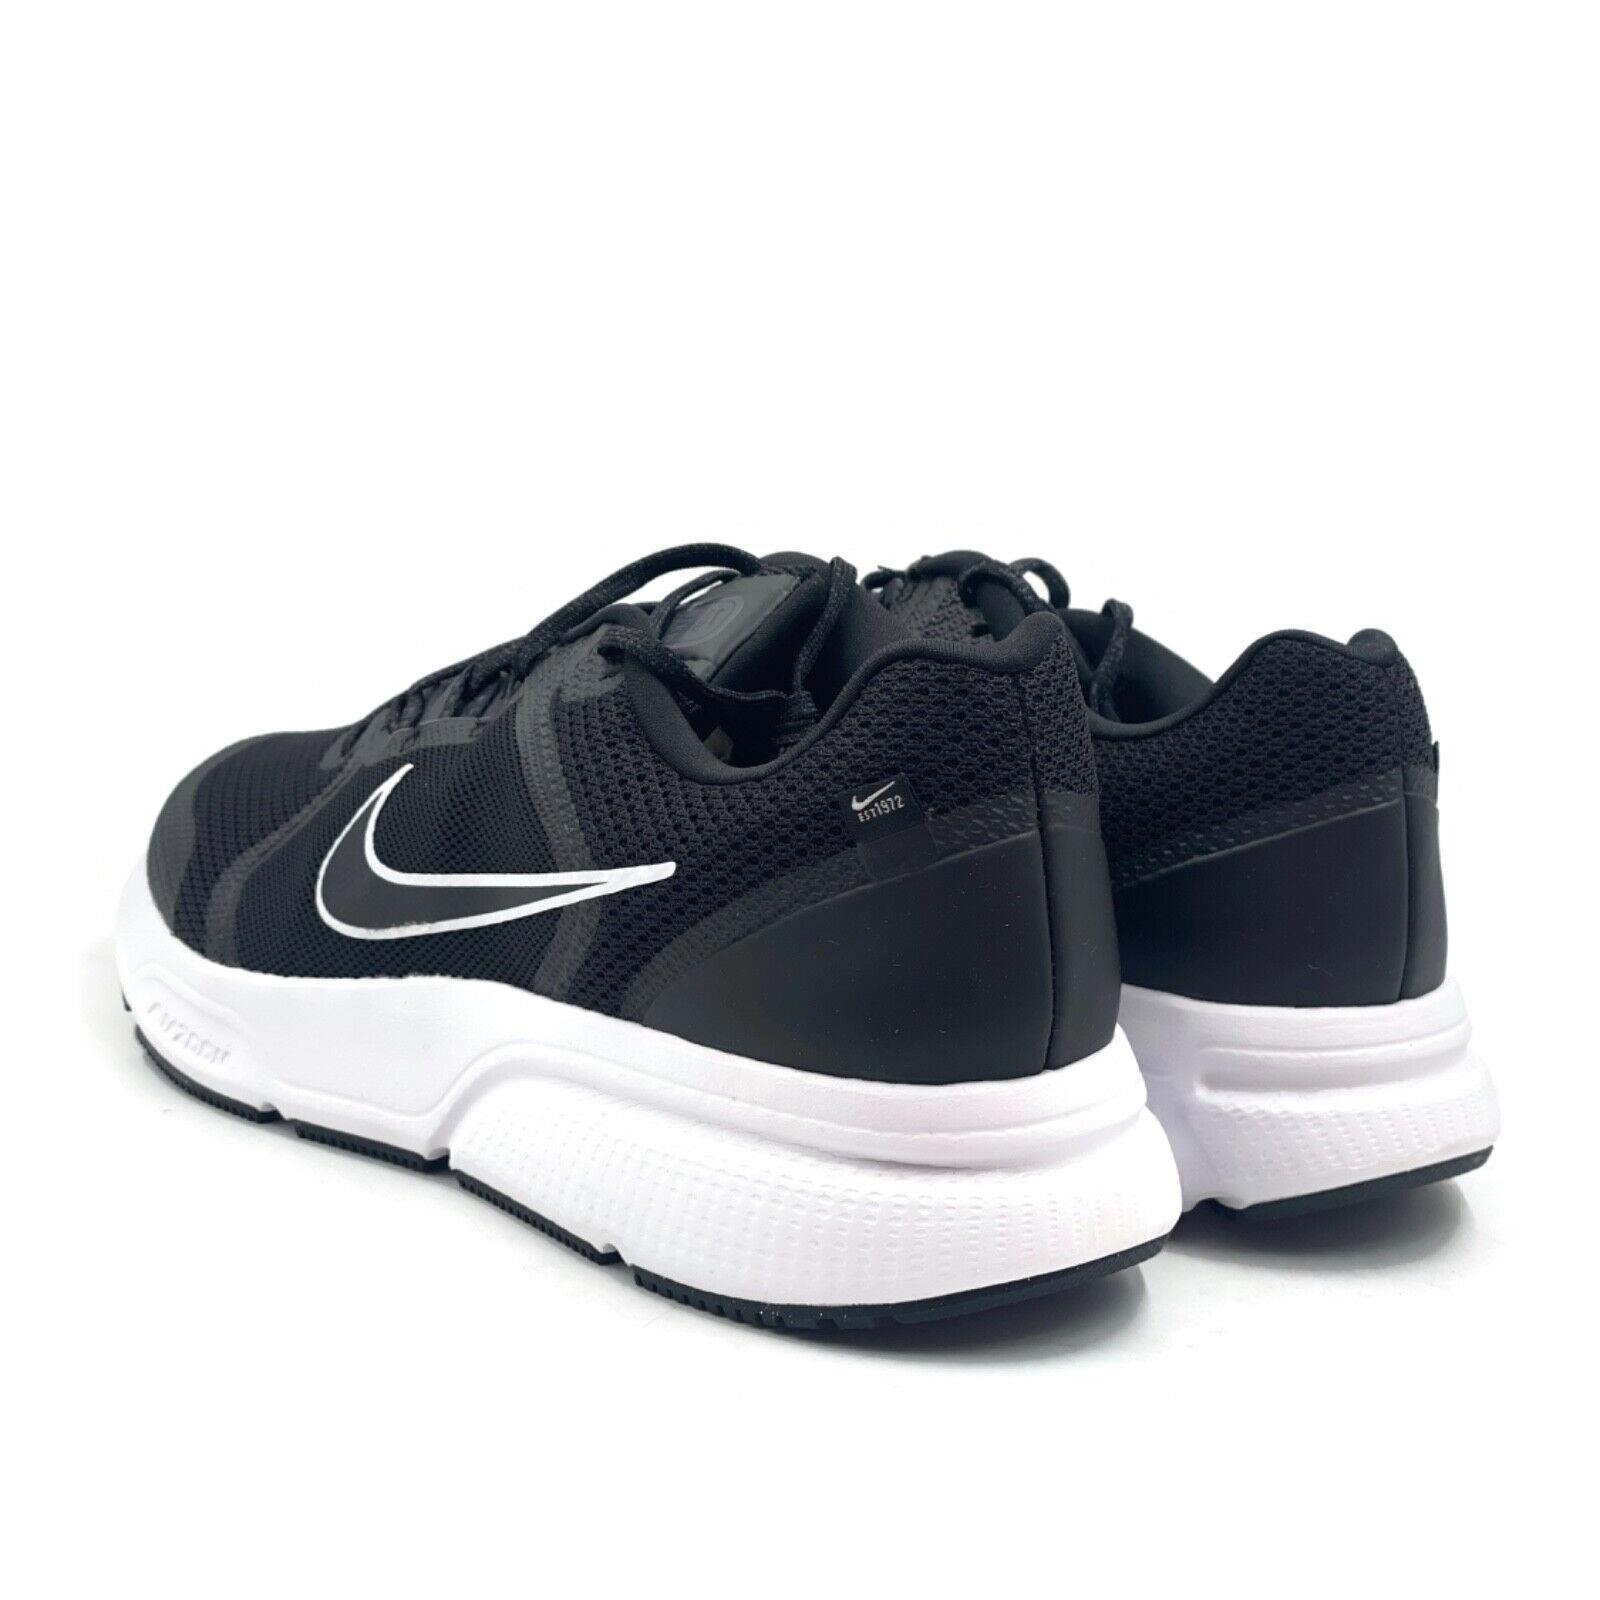 Nike shoes Zoom Span - Black White 1